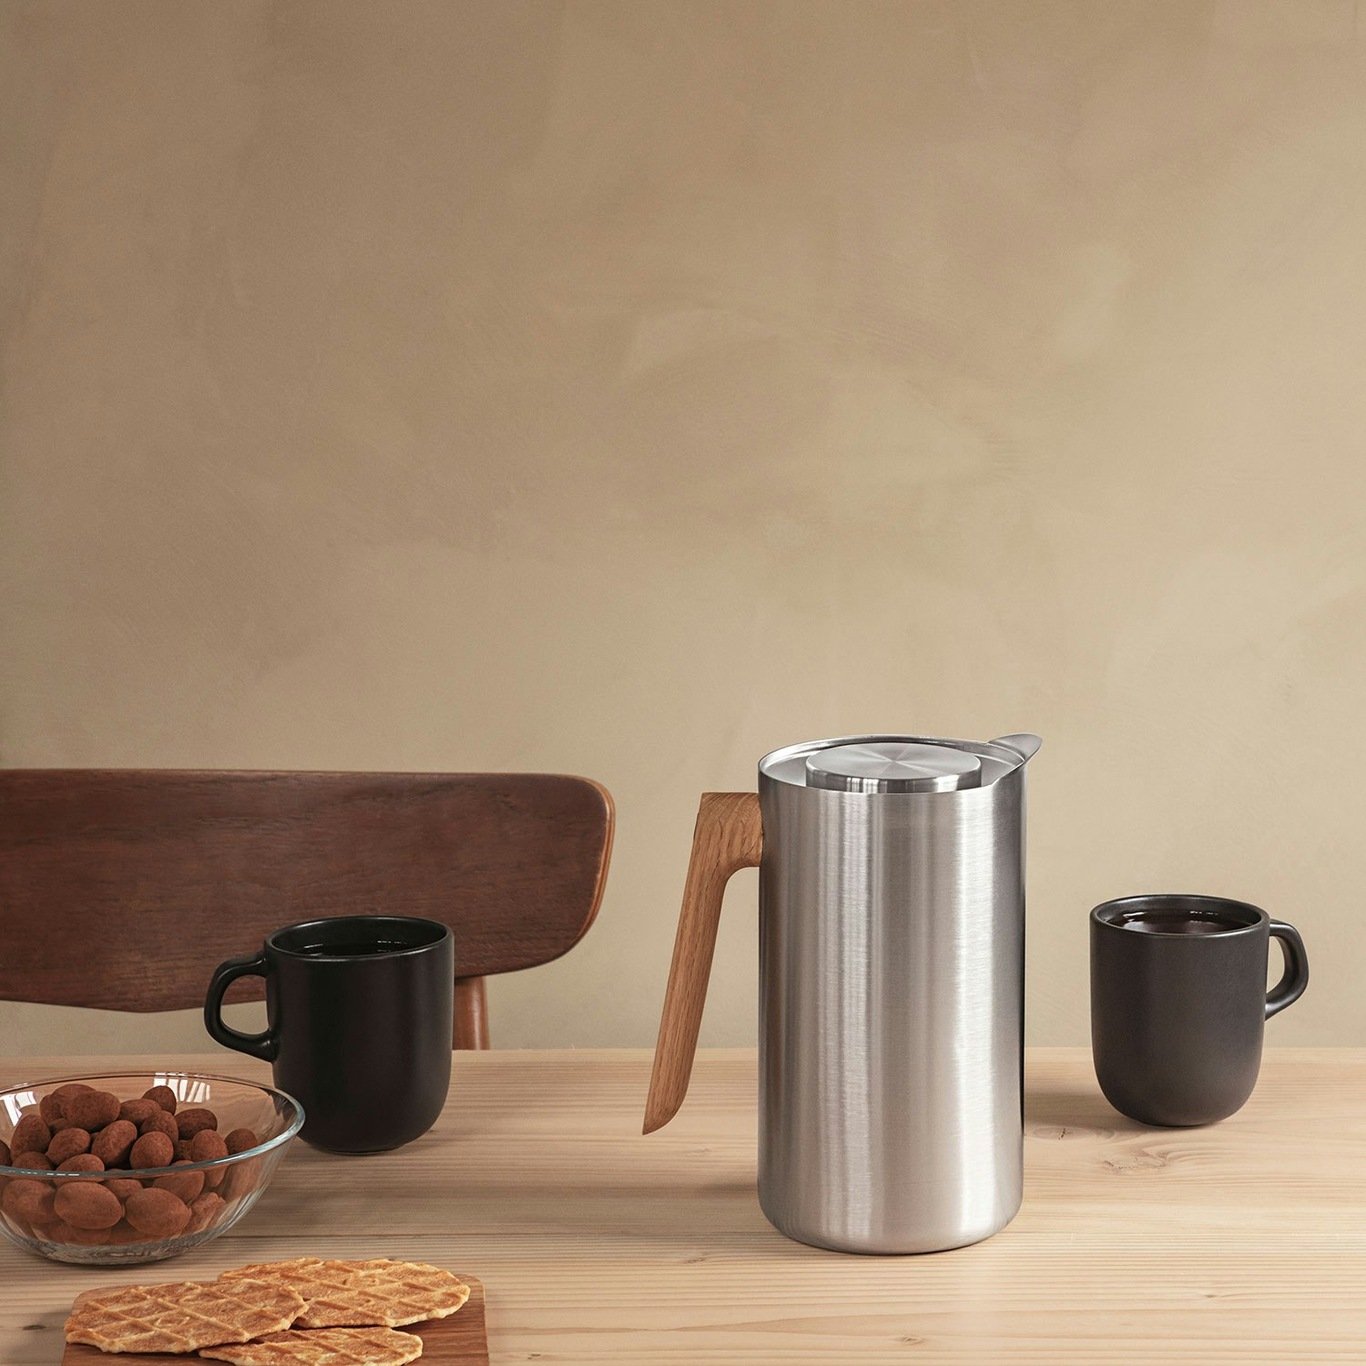 https://royaldesign.co.uk/image/6/eva-solo-nordic-kitchen-vacuum-jug-10-l-stainless-steel-6?w=800&quality=80